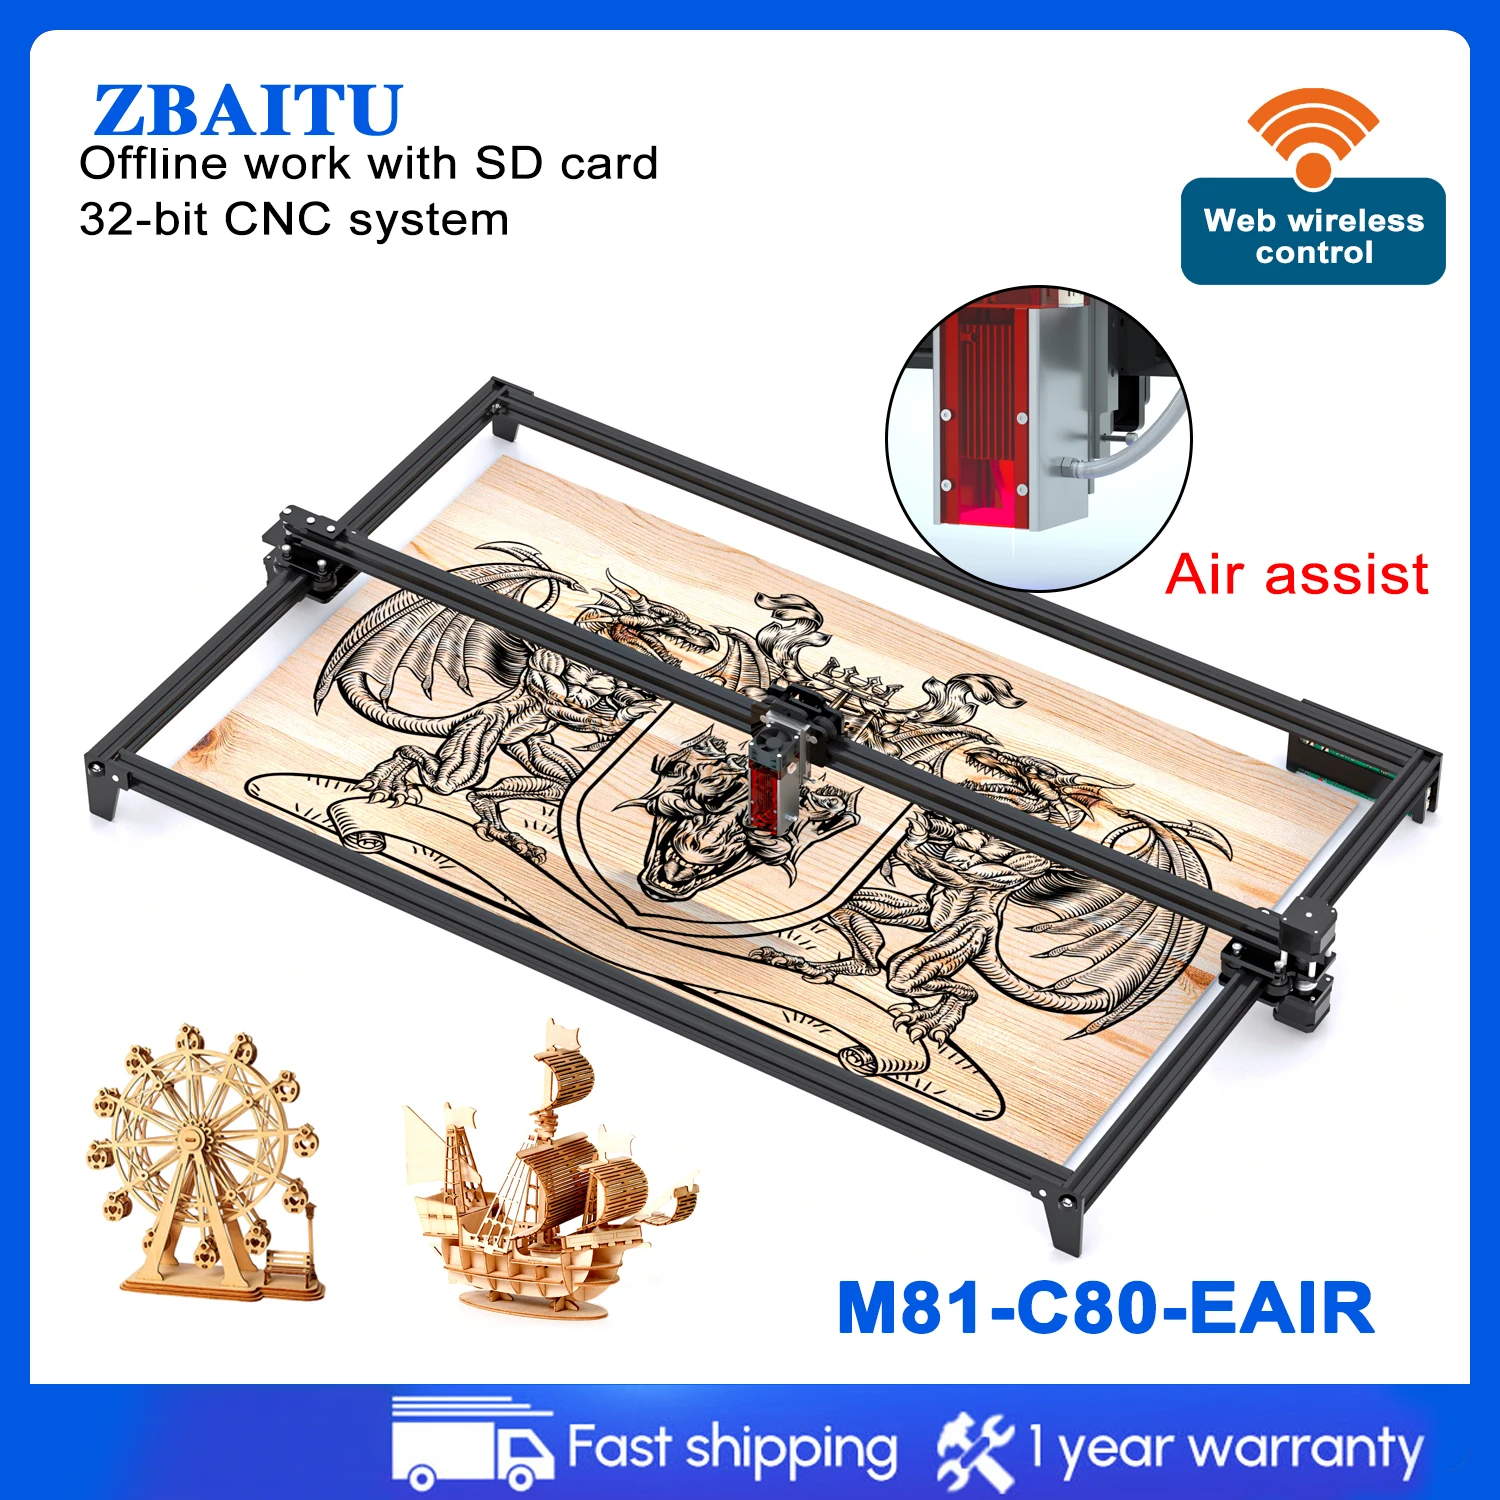 ZBAITU Desktop Laser Engraving Machine Engraver Frame with Laser Head Air Assist Nozzle 80W 40W Mark Printer Cutter Woodworking